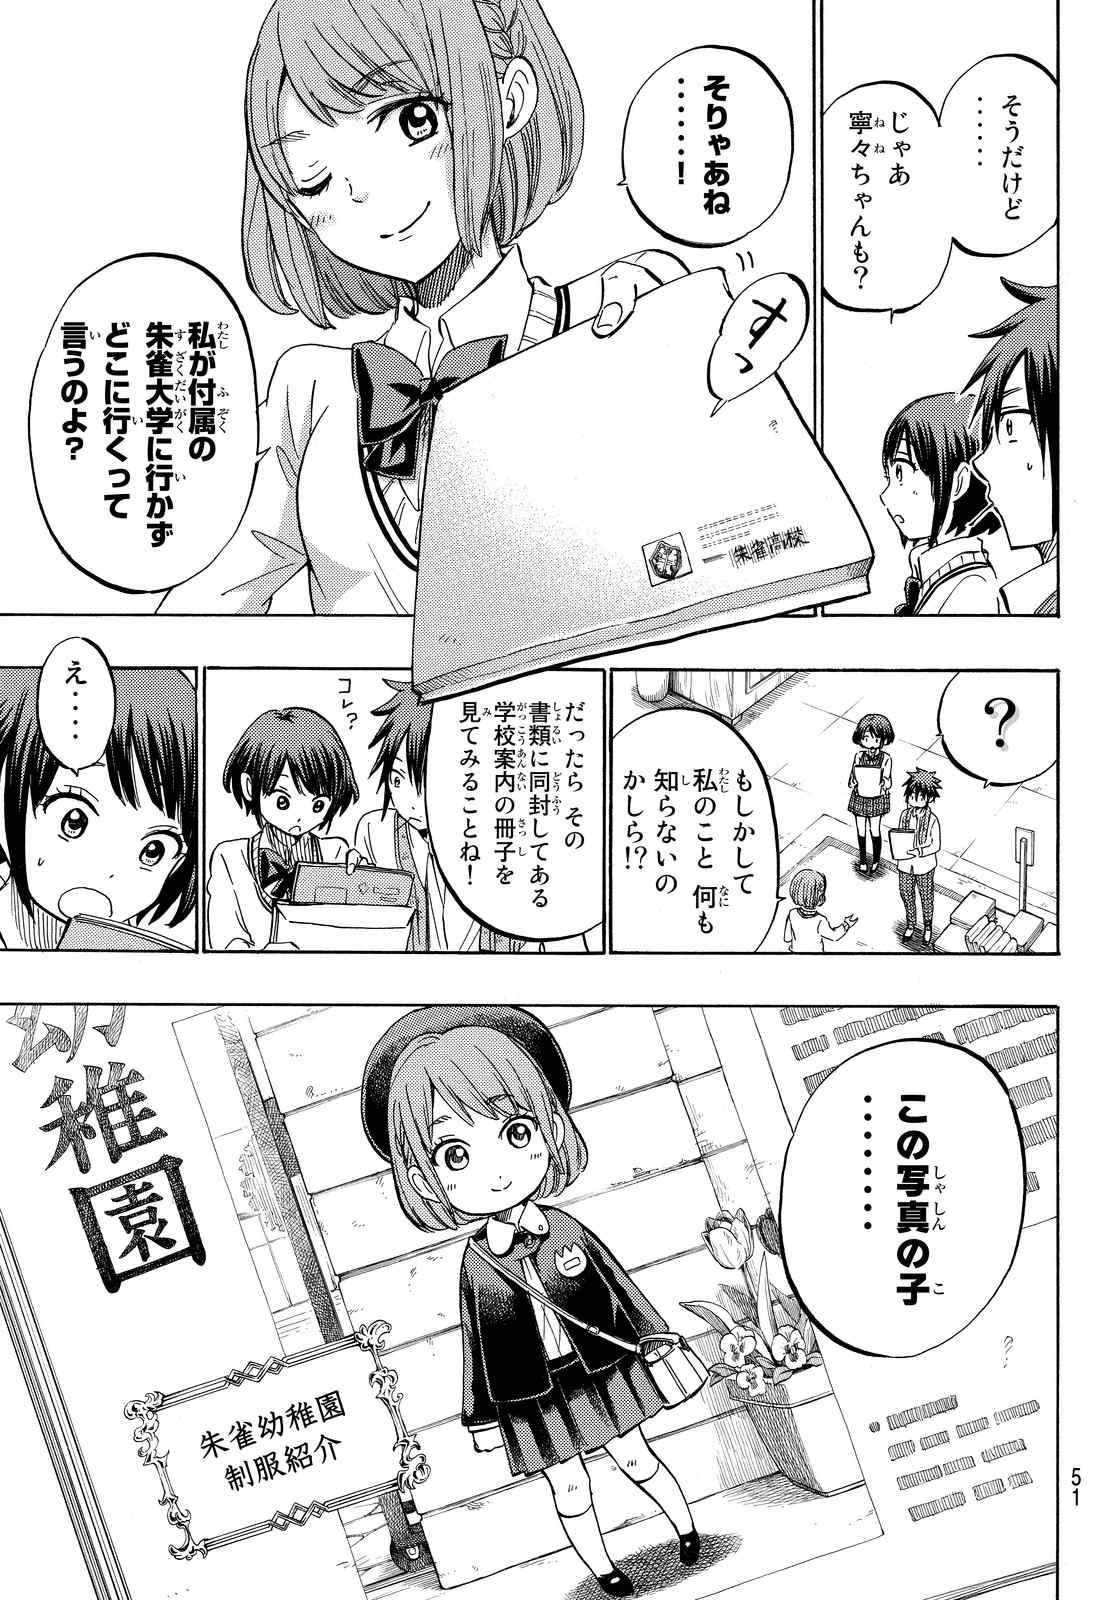 Yamada-kun to 7-nin no Majo - Chapter 233 - Page 3